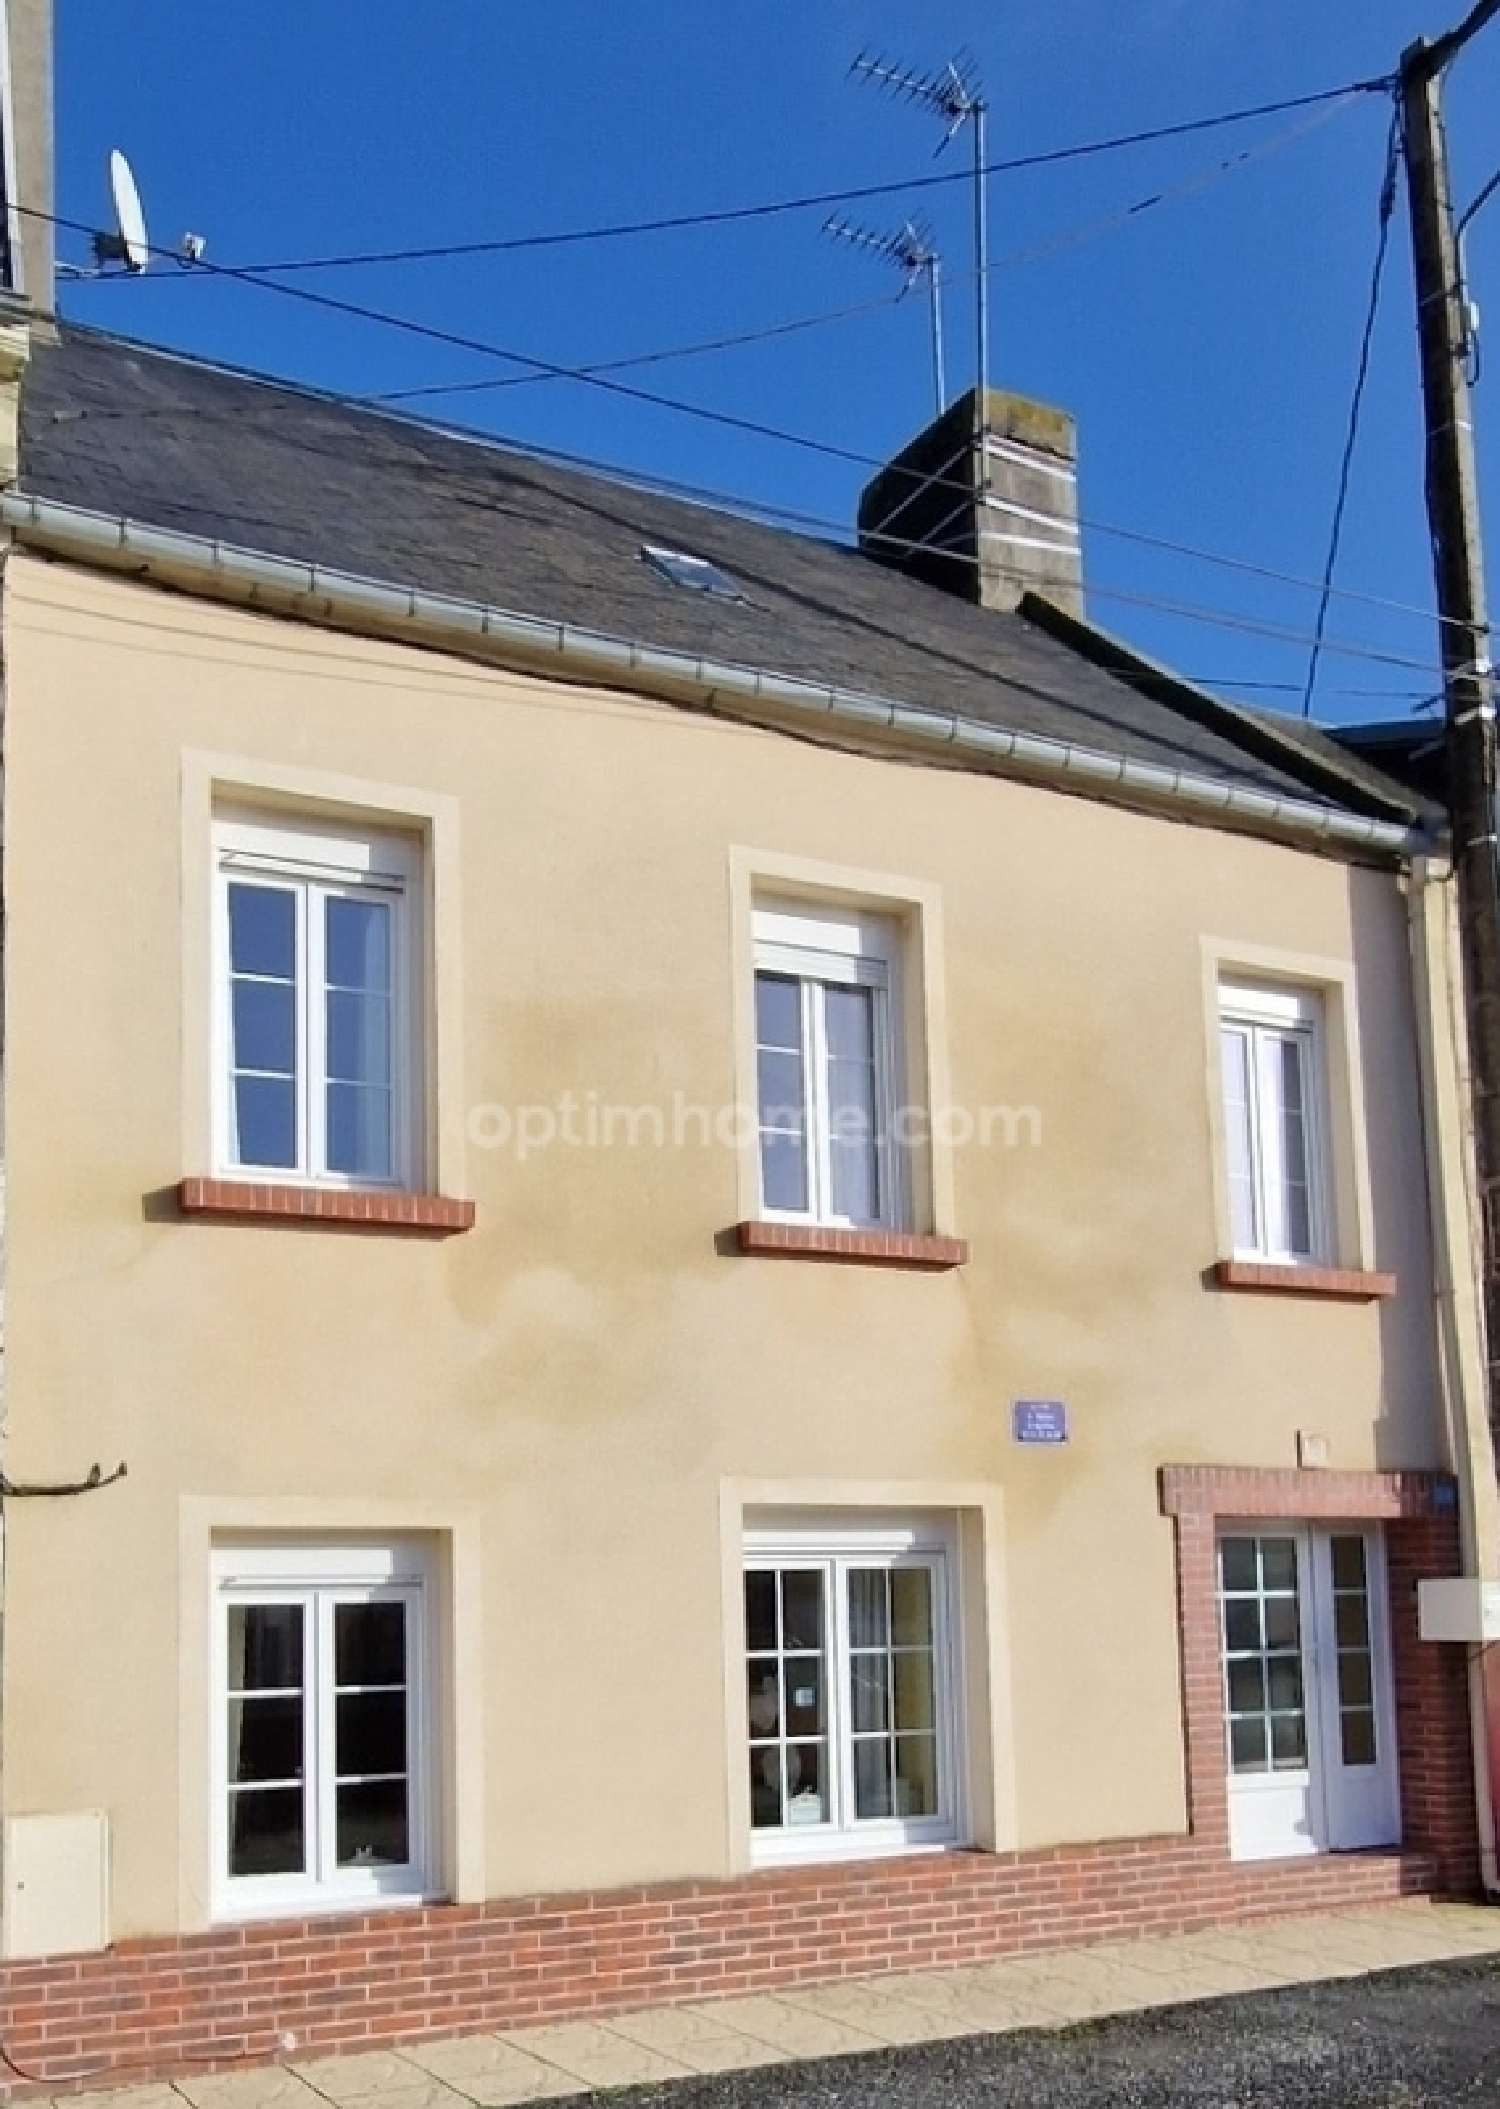  for sale city house Isigny-sur-Mer Calvados 1